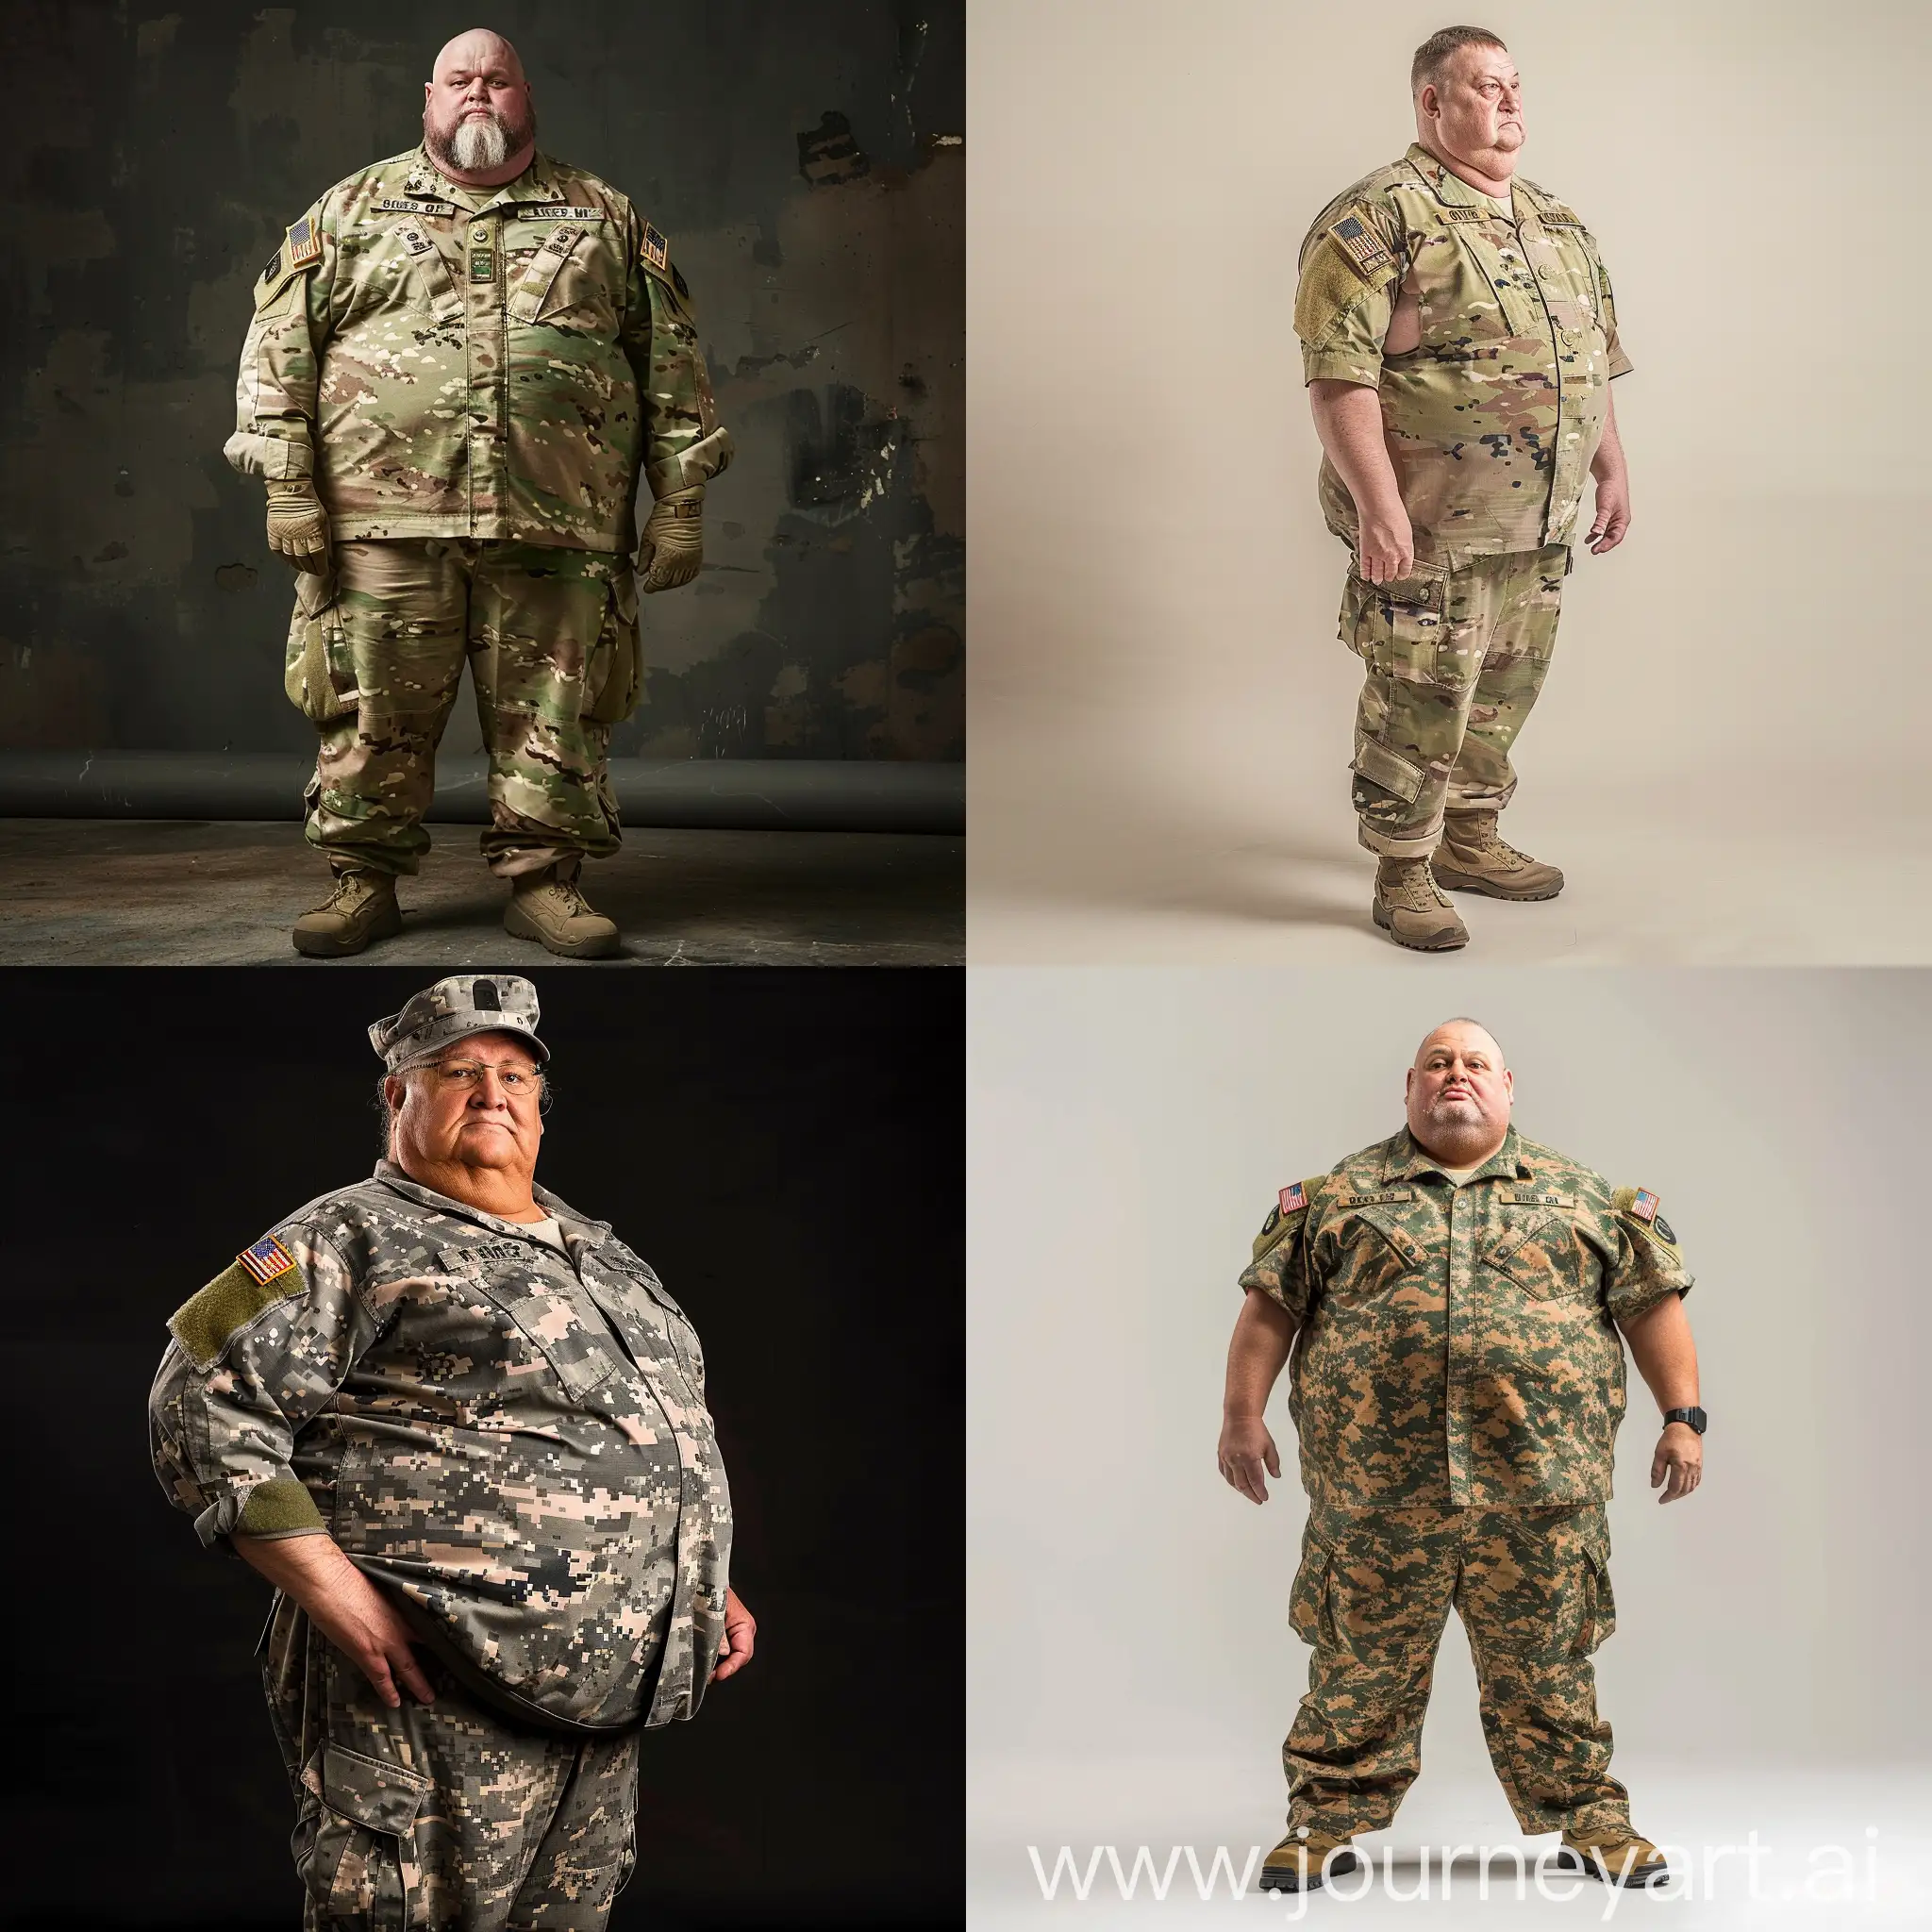 Elderly-Veteran-in-Full-US-Army-Combat-Uniform-Portrait